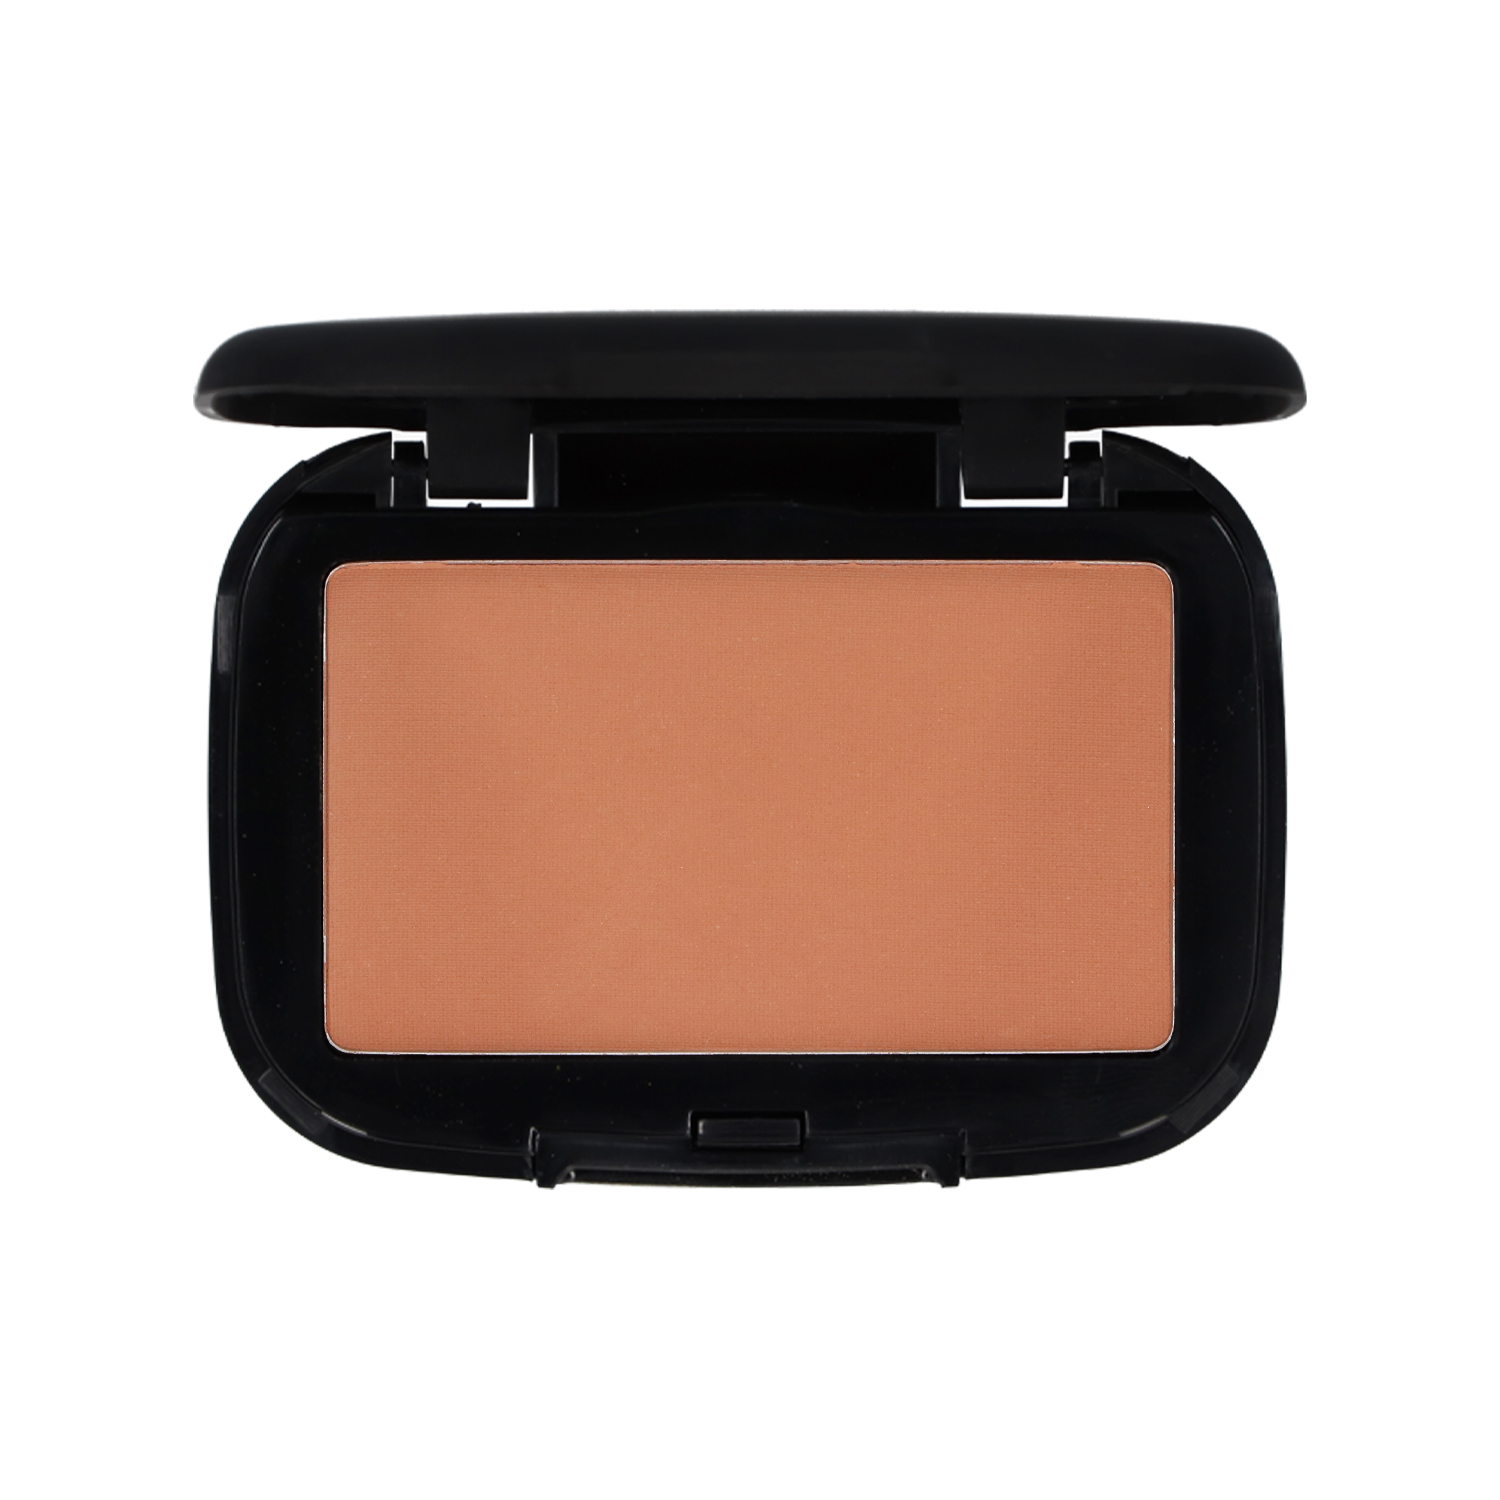 Make-up Studio Compact Earth Powder Bronzer - 1 Brown